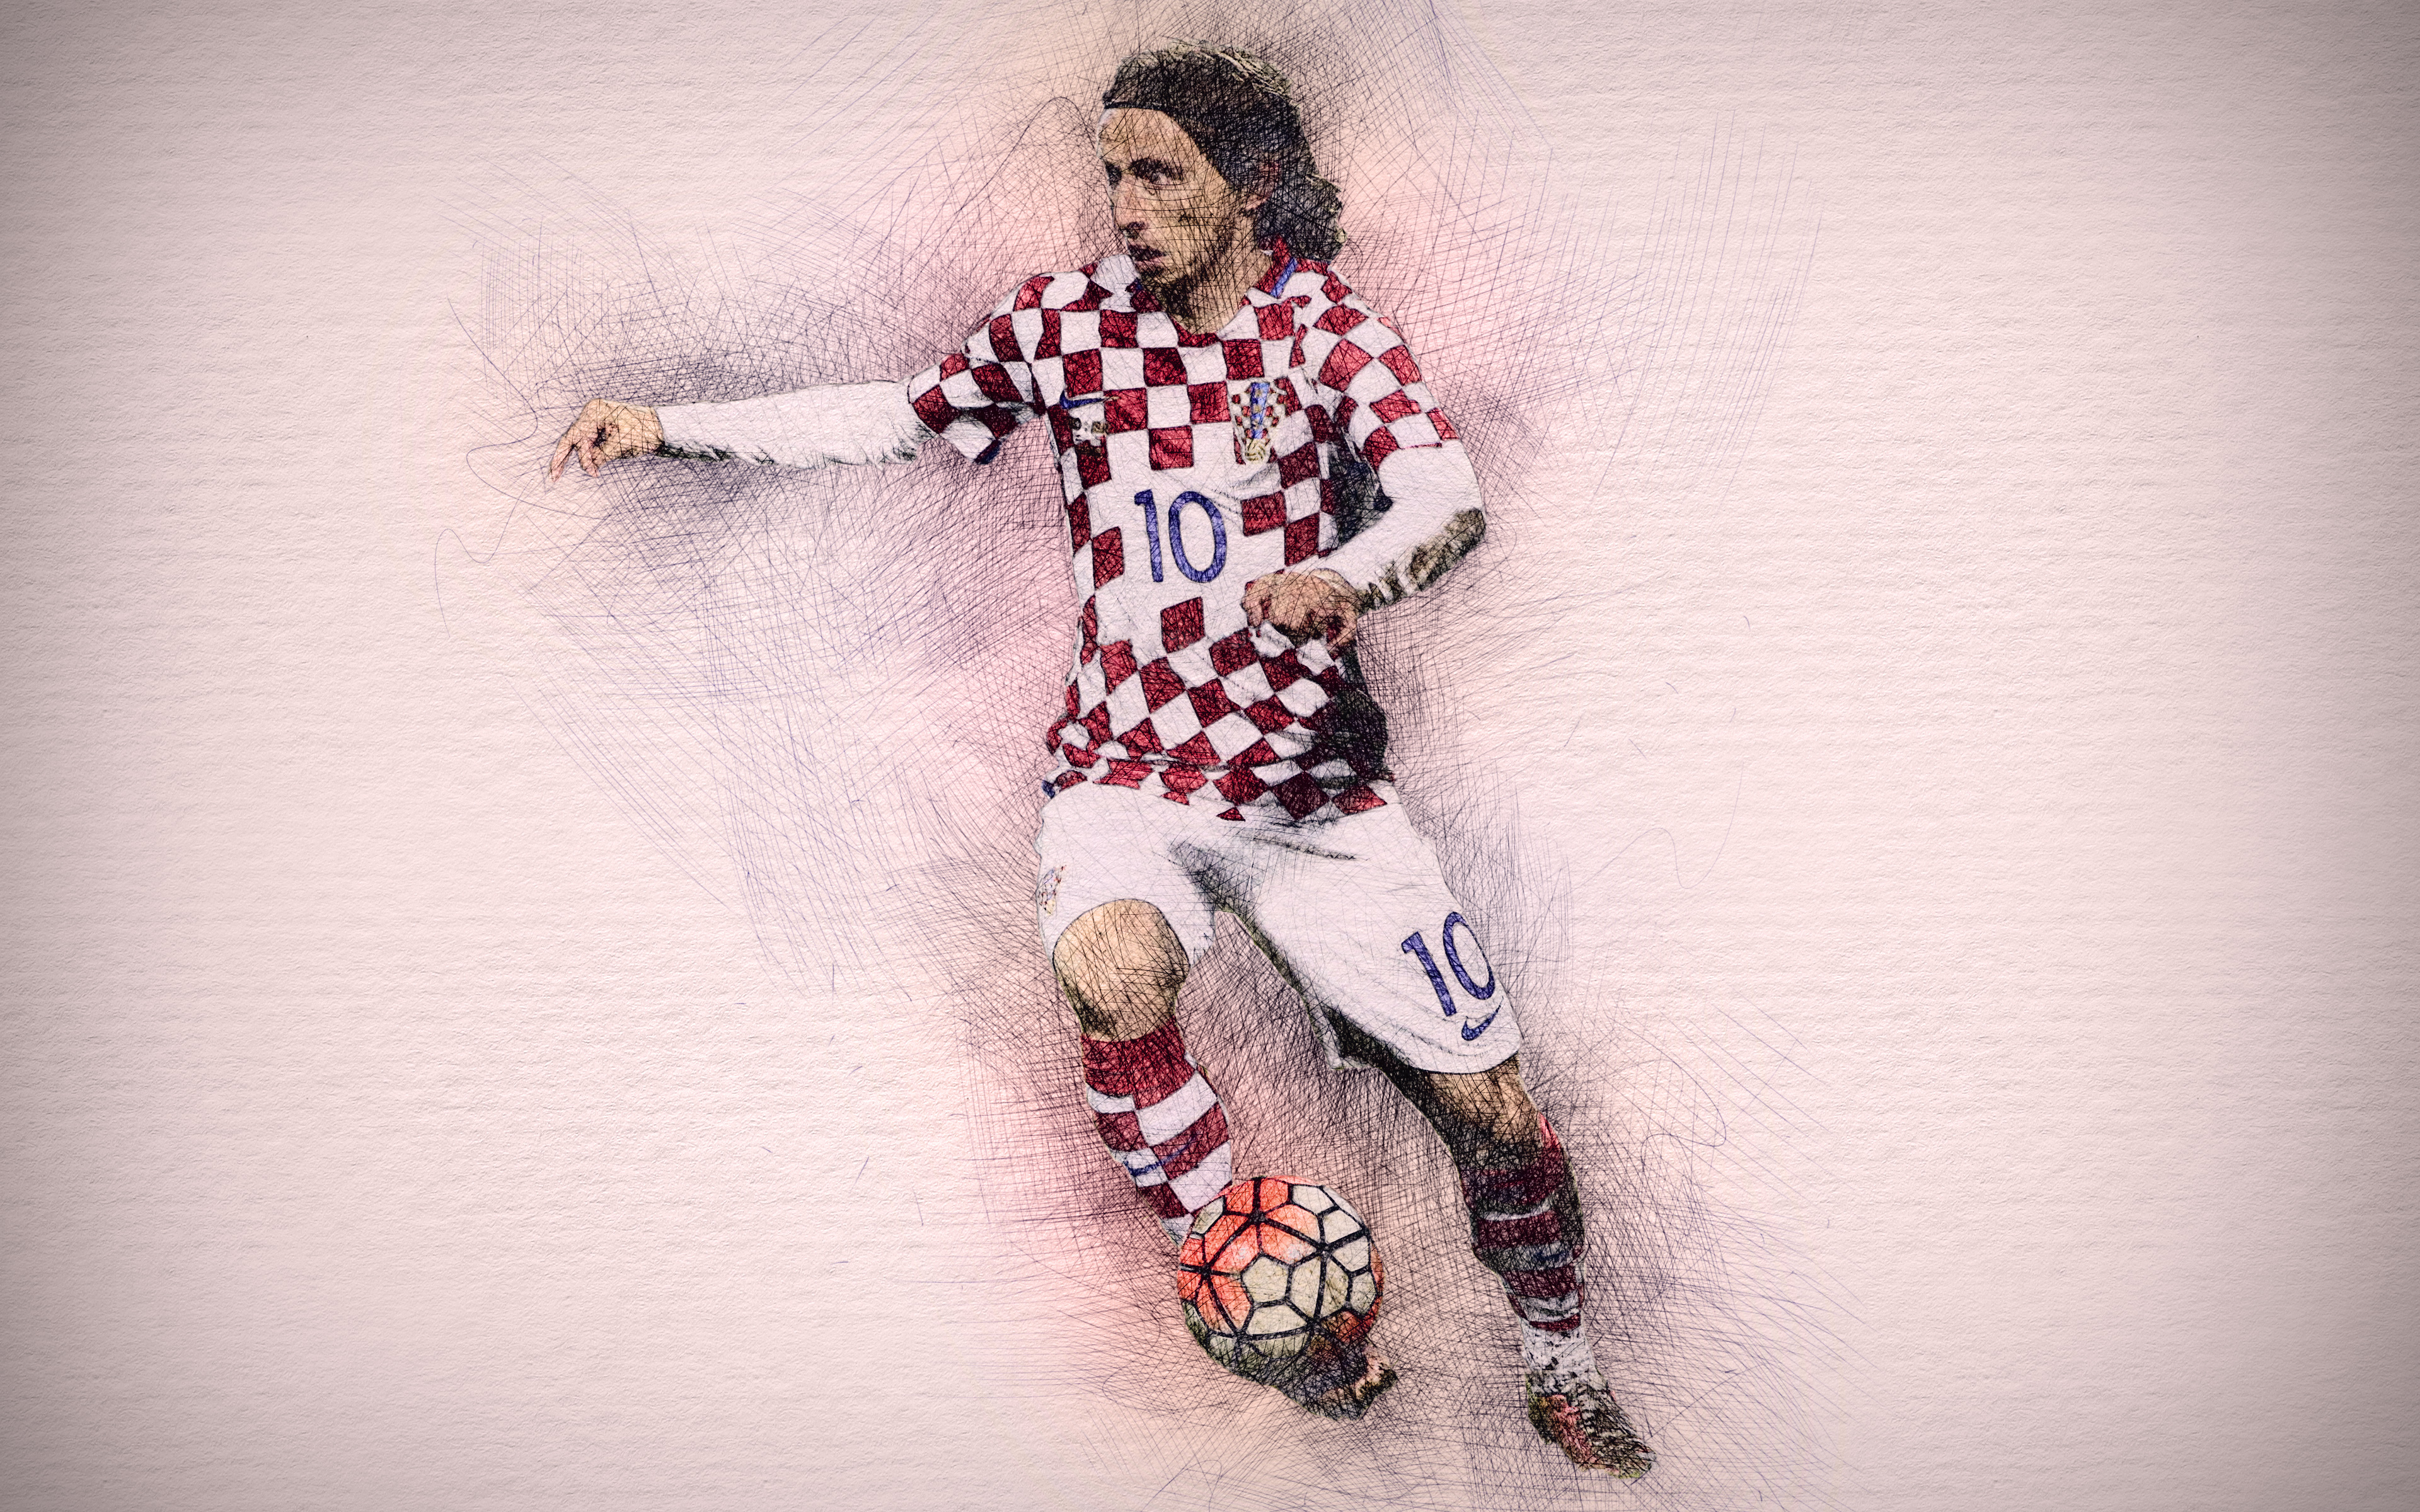 Croatian Luka Modric Soccer 3840x2400